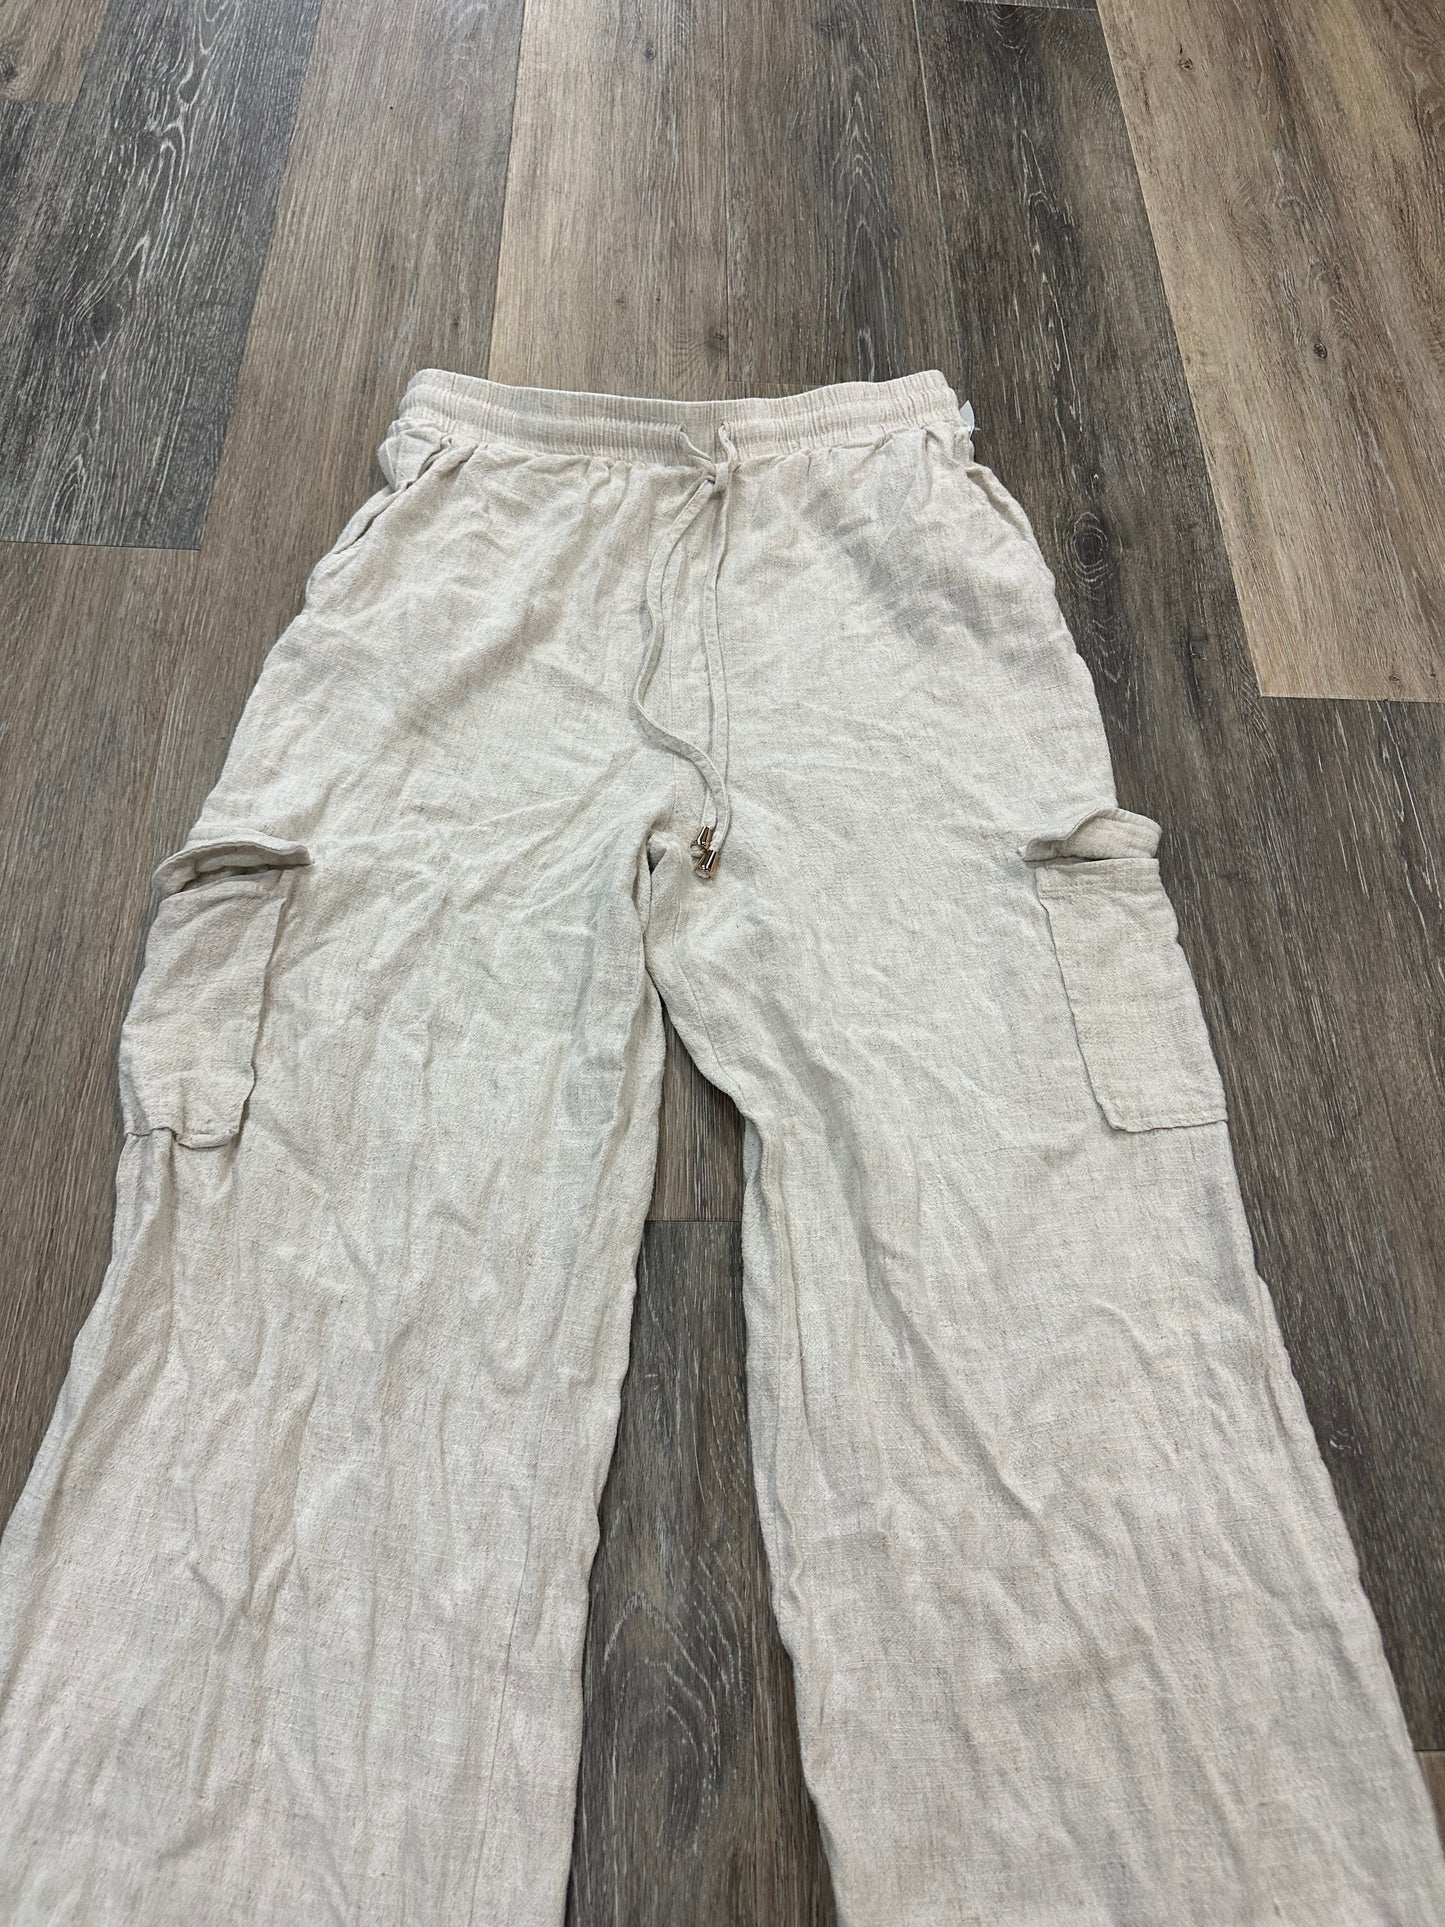 Pants Linen By Allie Rose  Size: M